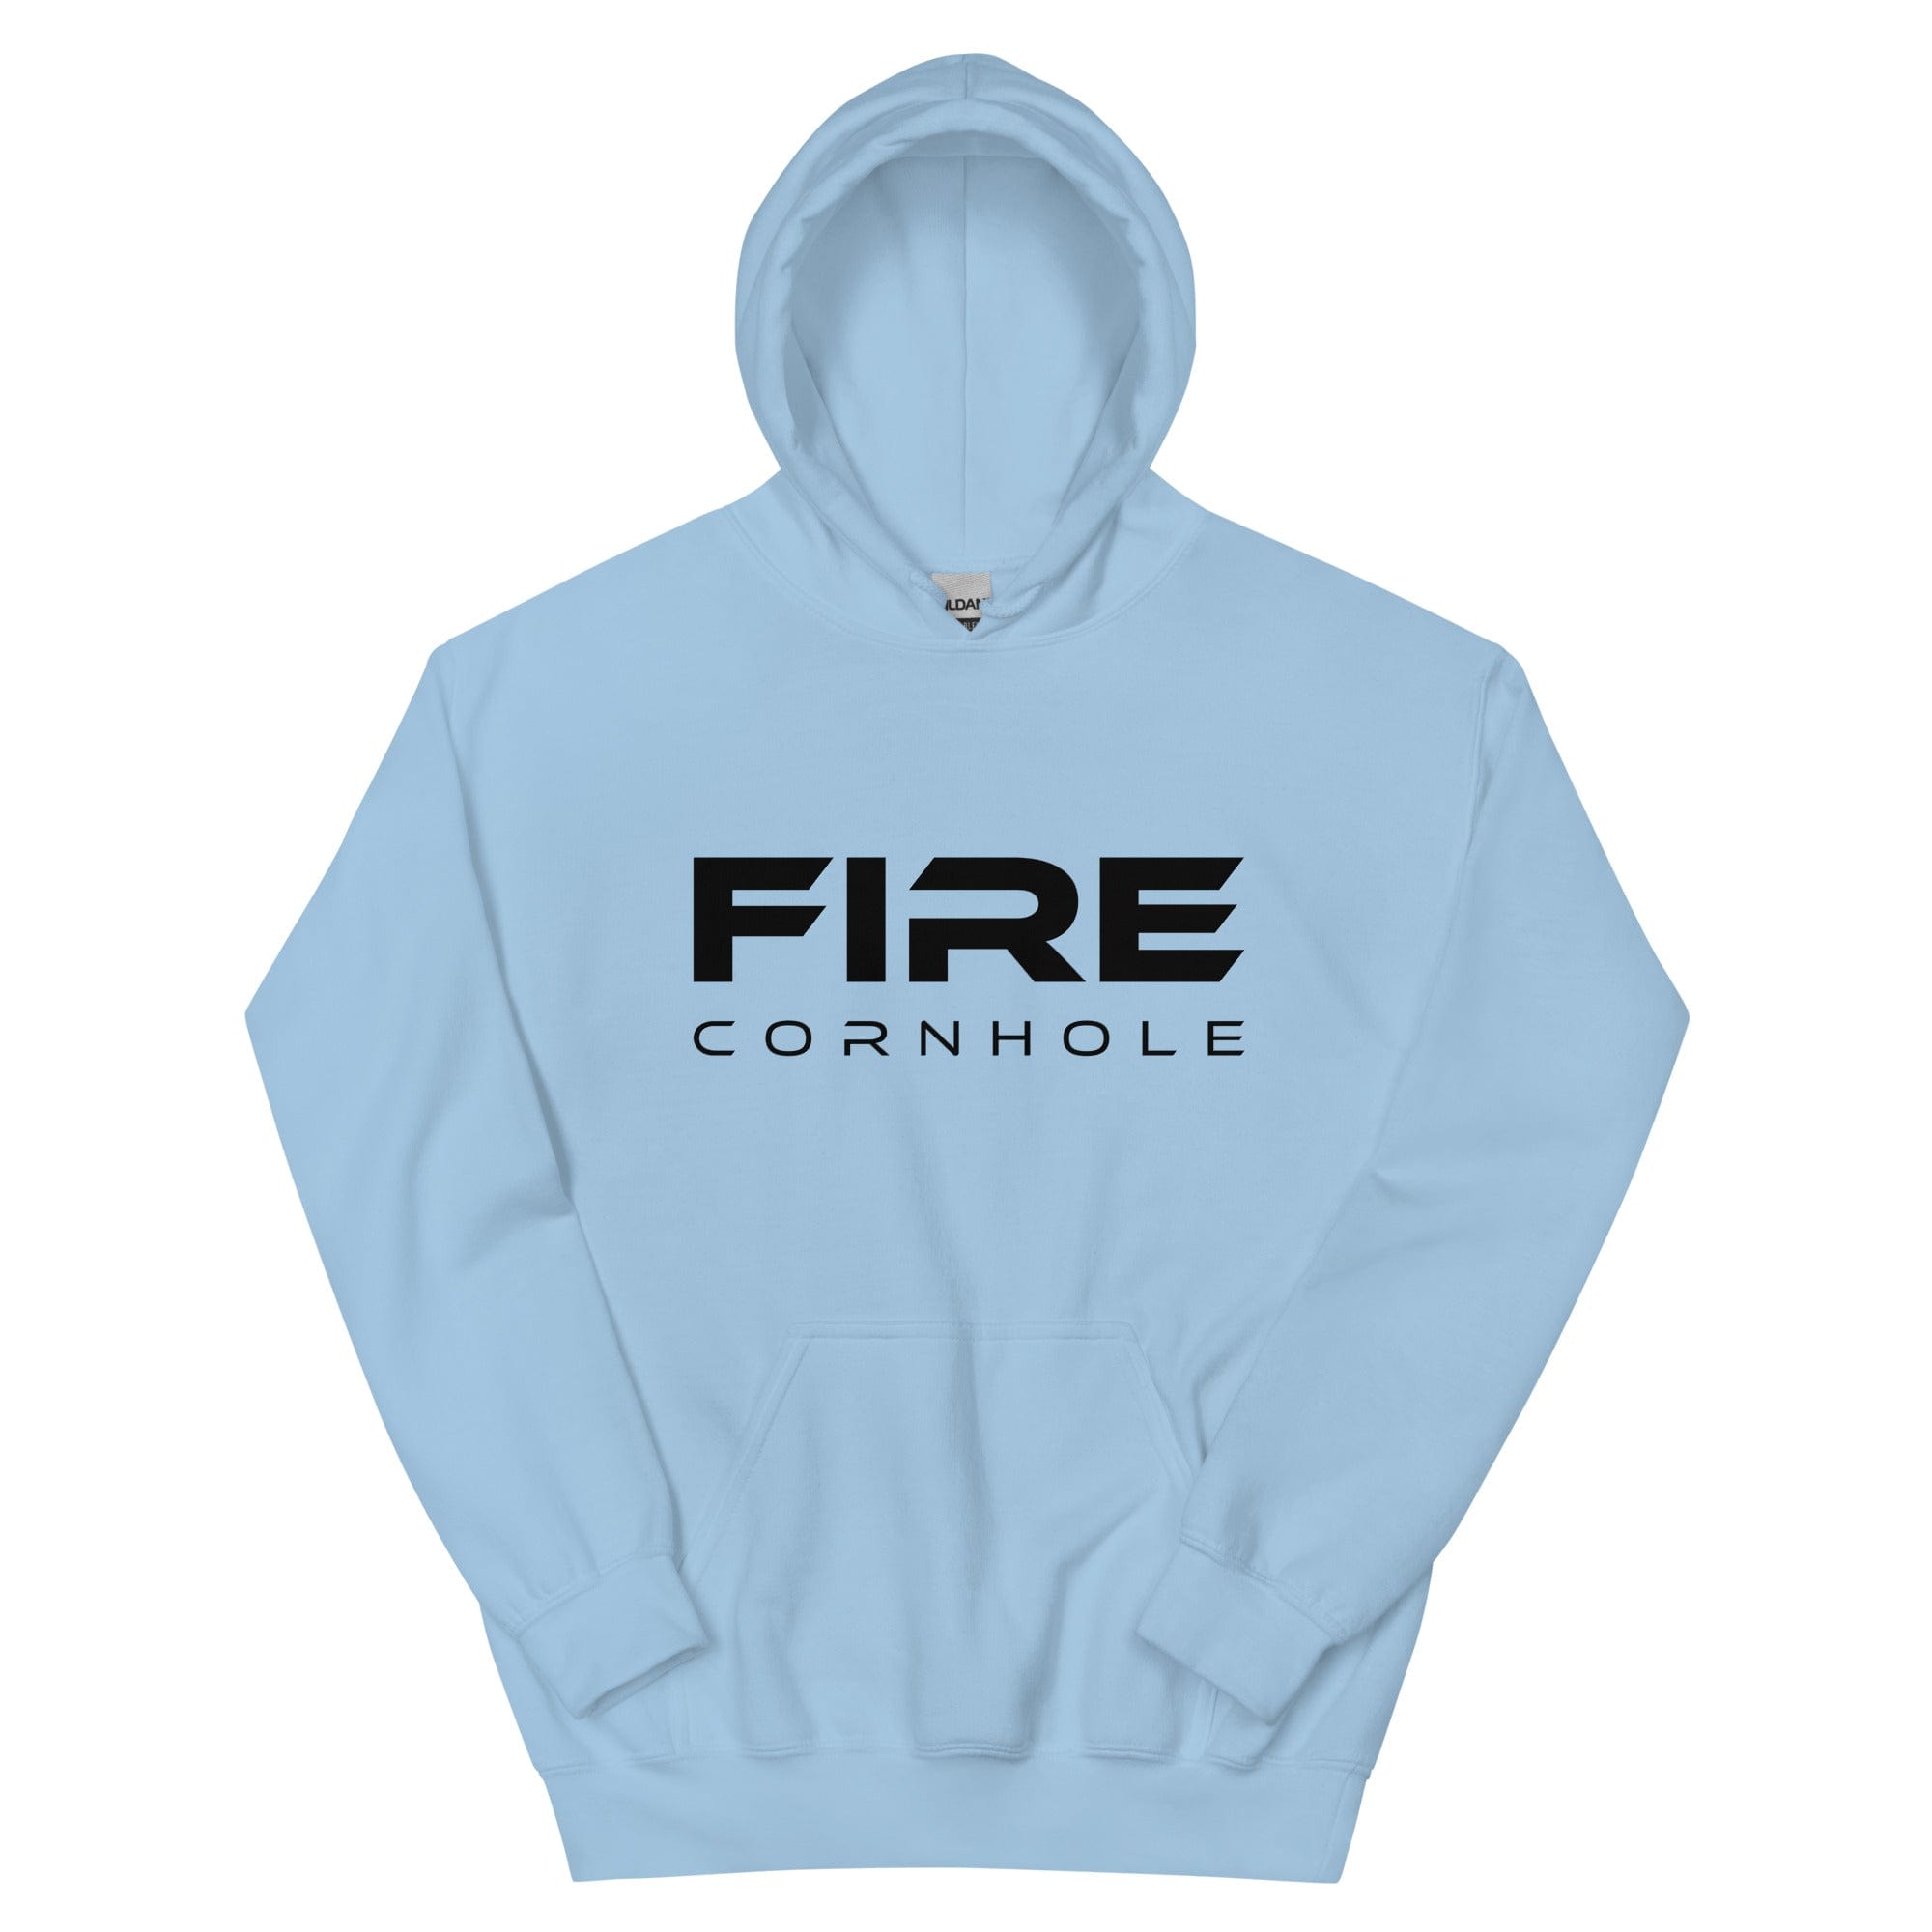 Light blue unisex cotton hoodie with Fire Cornhole logo in black